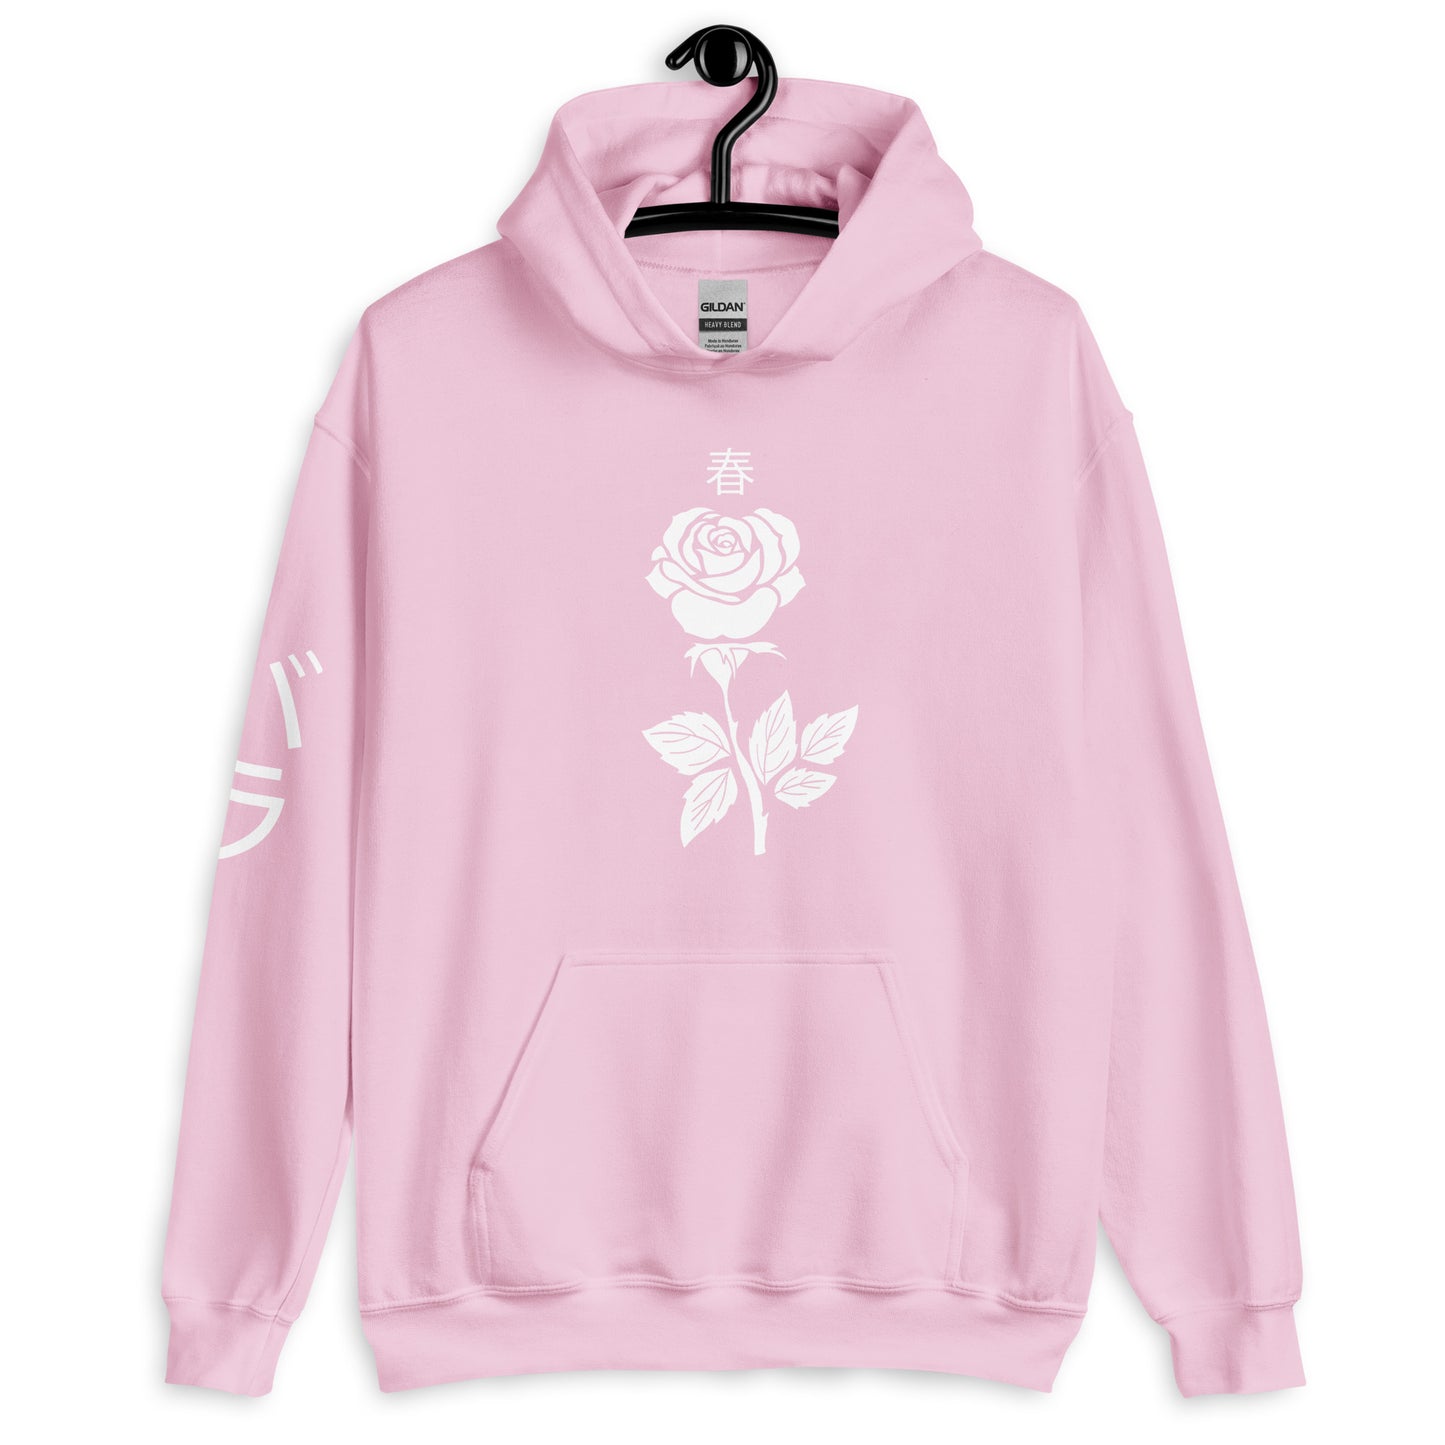 Rose Hoodie for women pocket alternative aesthetic cute women's Rose Flower Tee